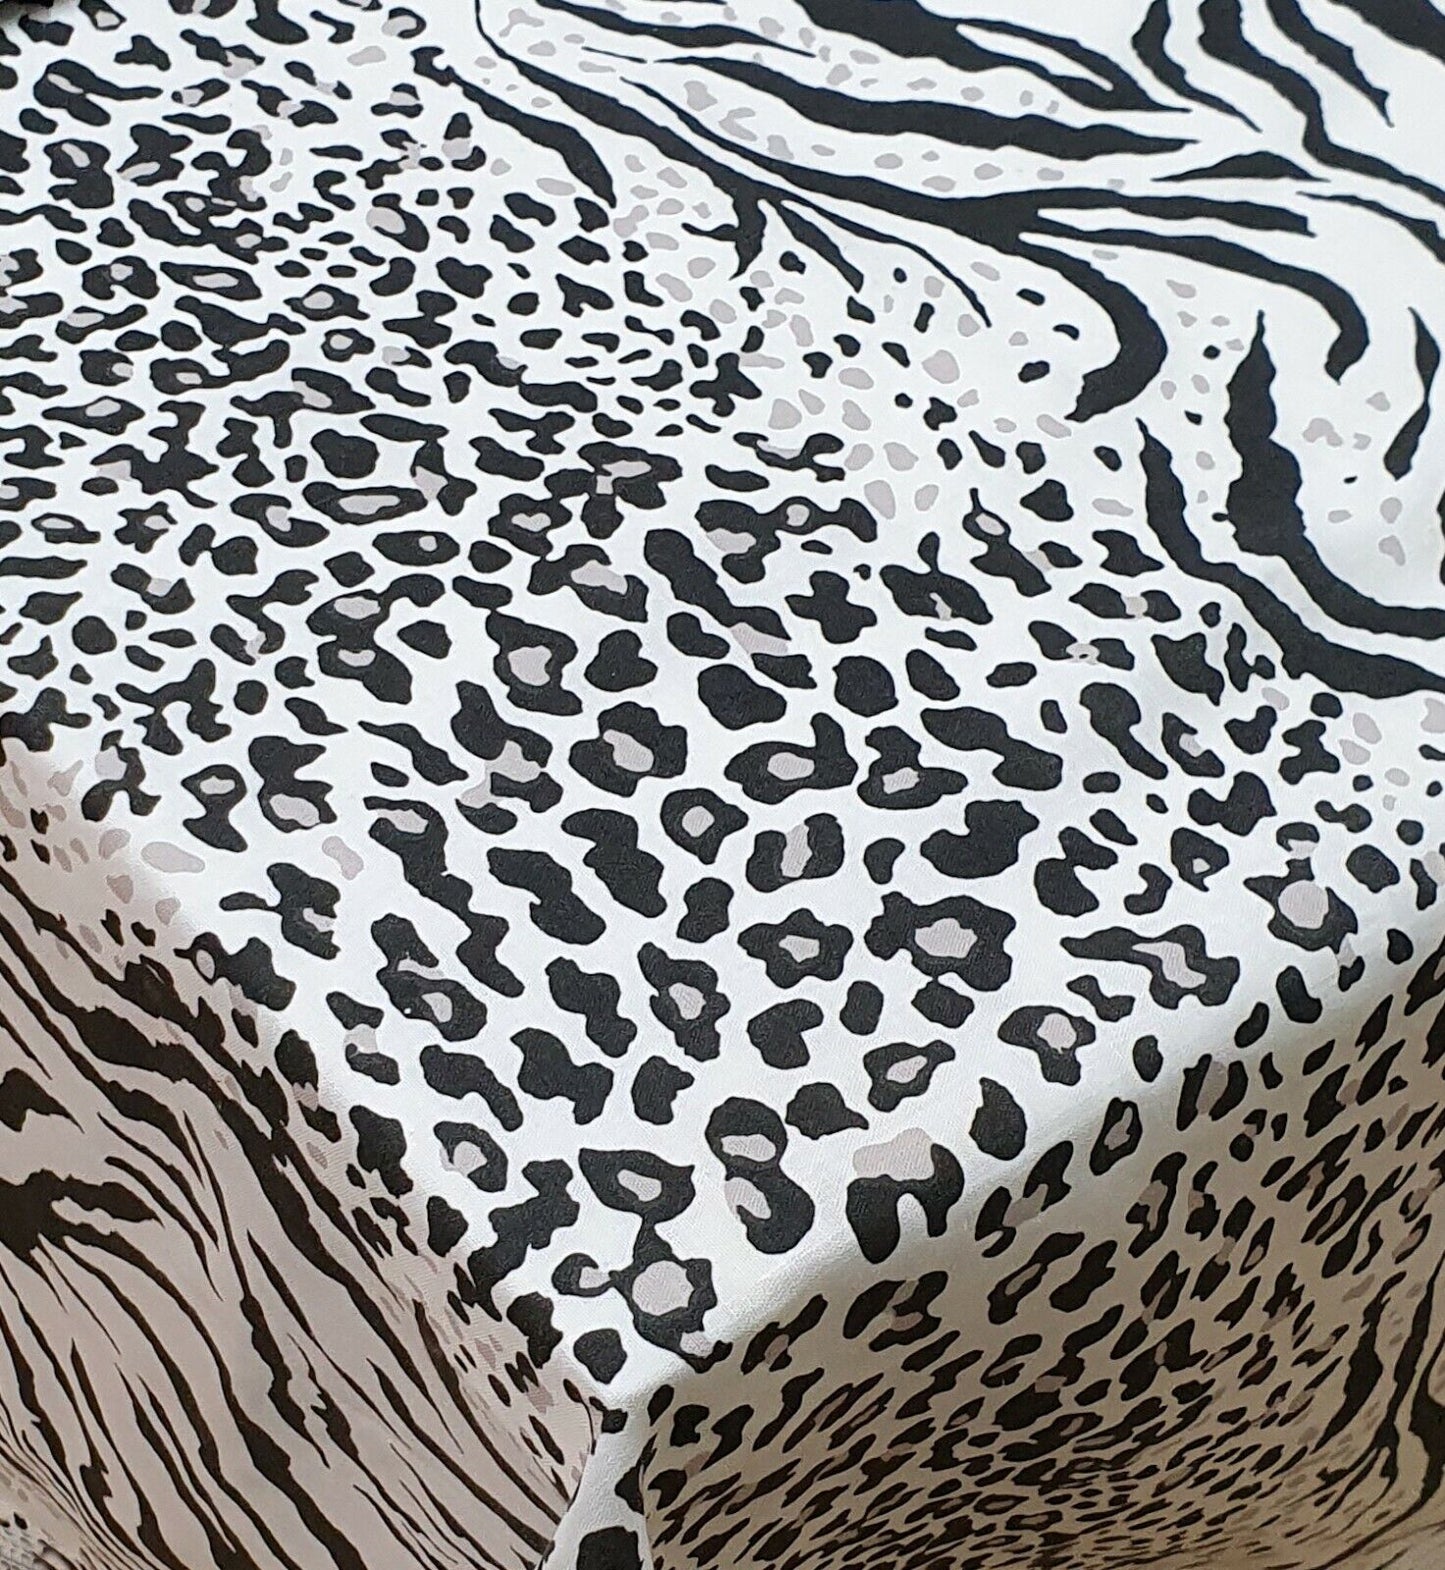 King Size Fitted Sheet Kalahari Animal Print Zebra Tiger Leopard